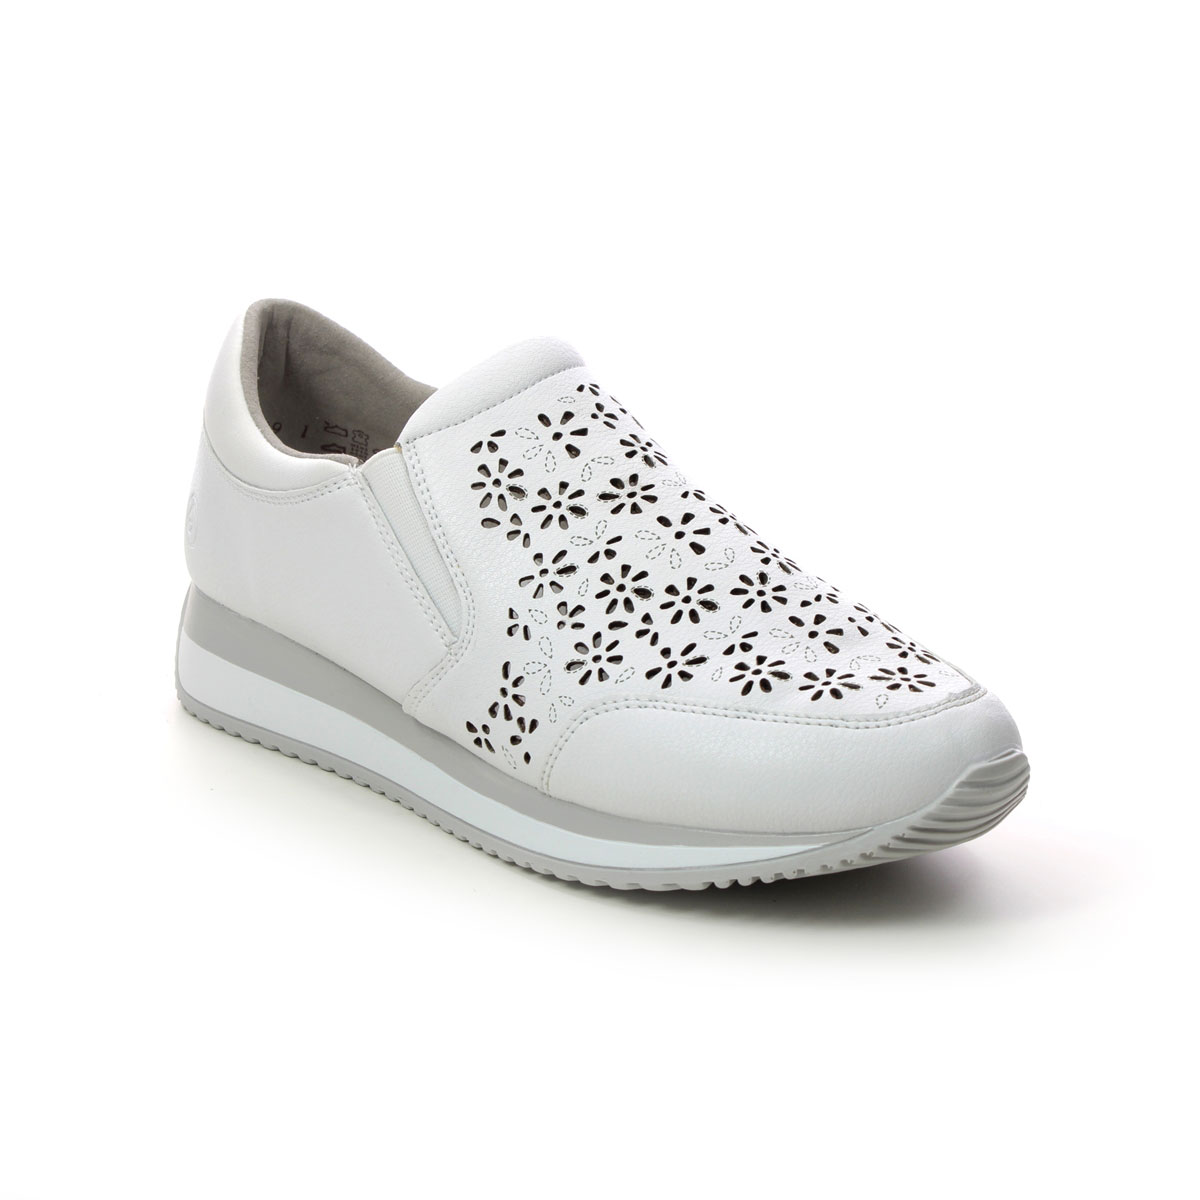 Remonte Vapodperf White Womens Comfort Slip On Shoes D0H06-80 In Size 39 In Plain White